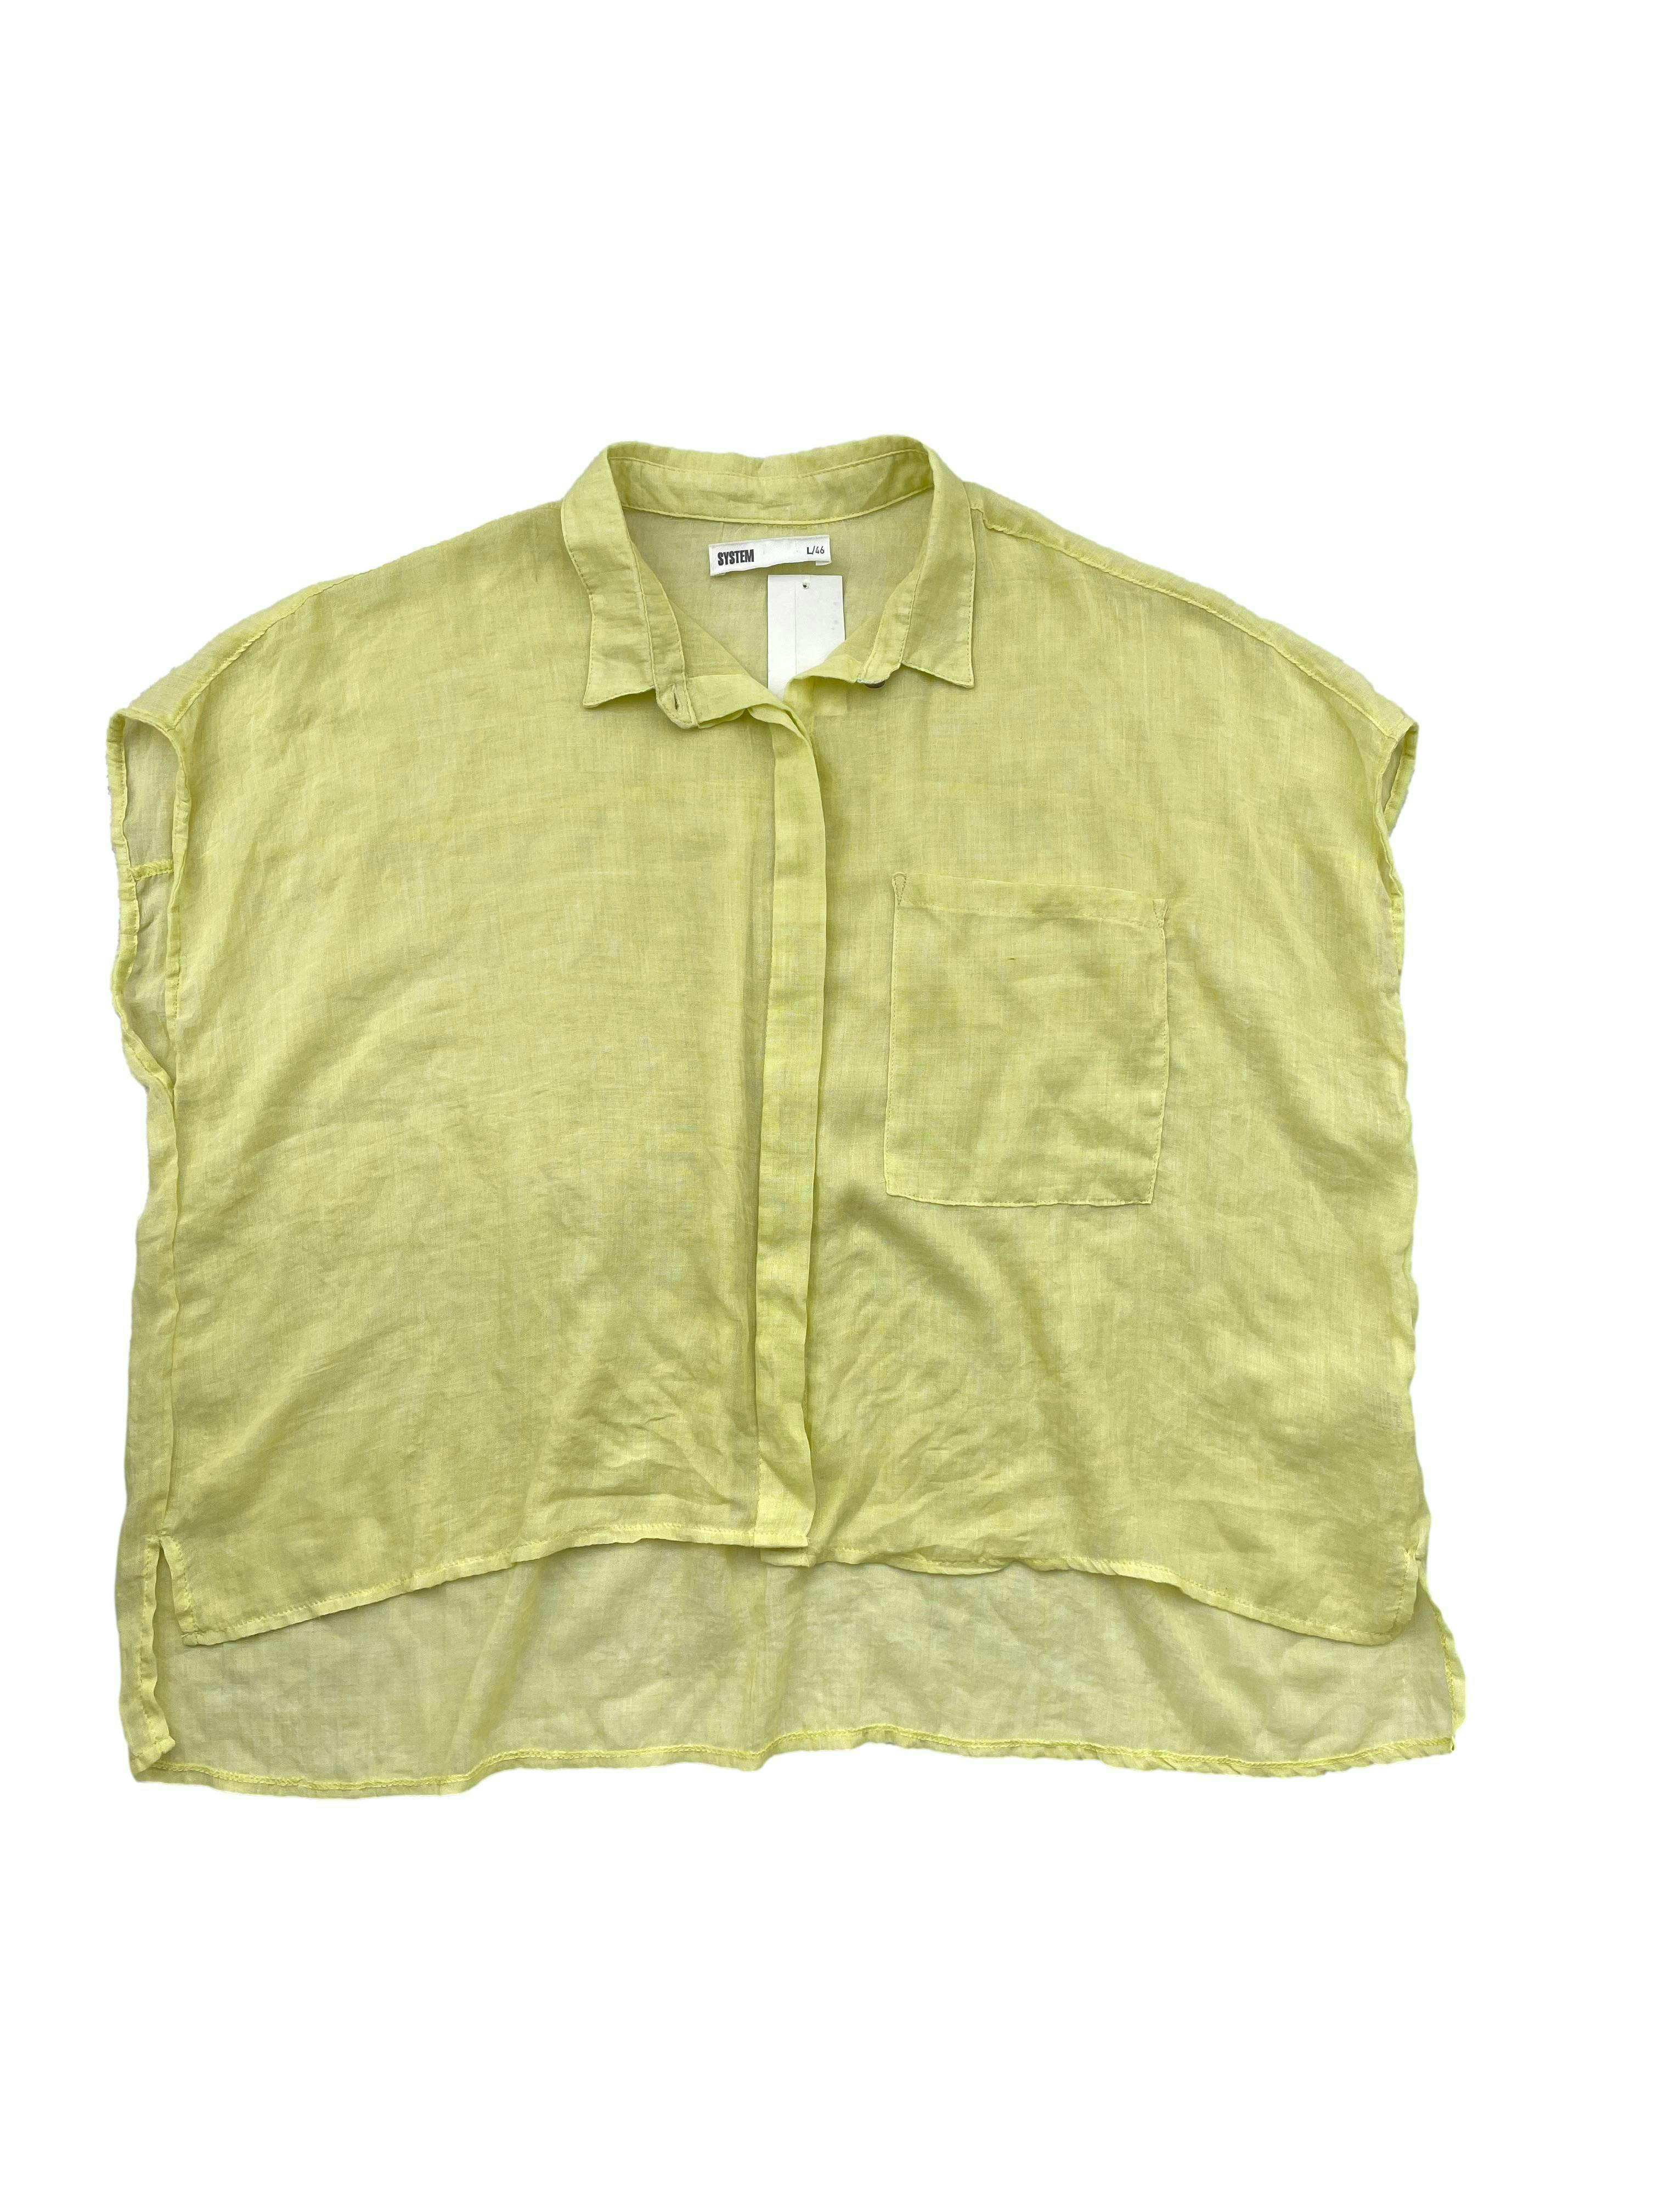 Blusa amarillo pastel de tela fresca tipo lino, con bolsillo frontal y aberturas laterales. Busto 148cm, Largo 52-60cm.